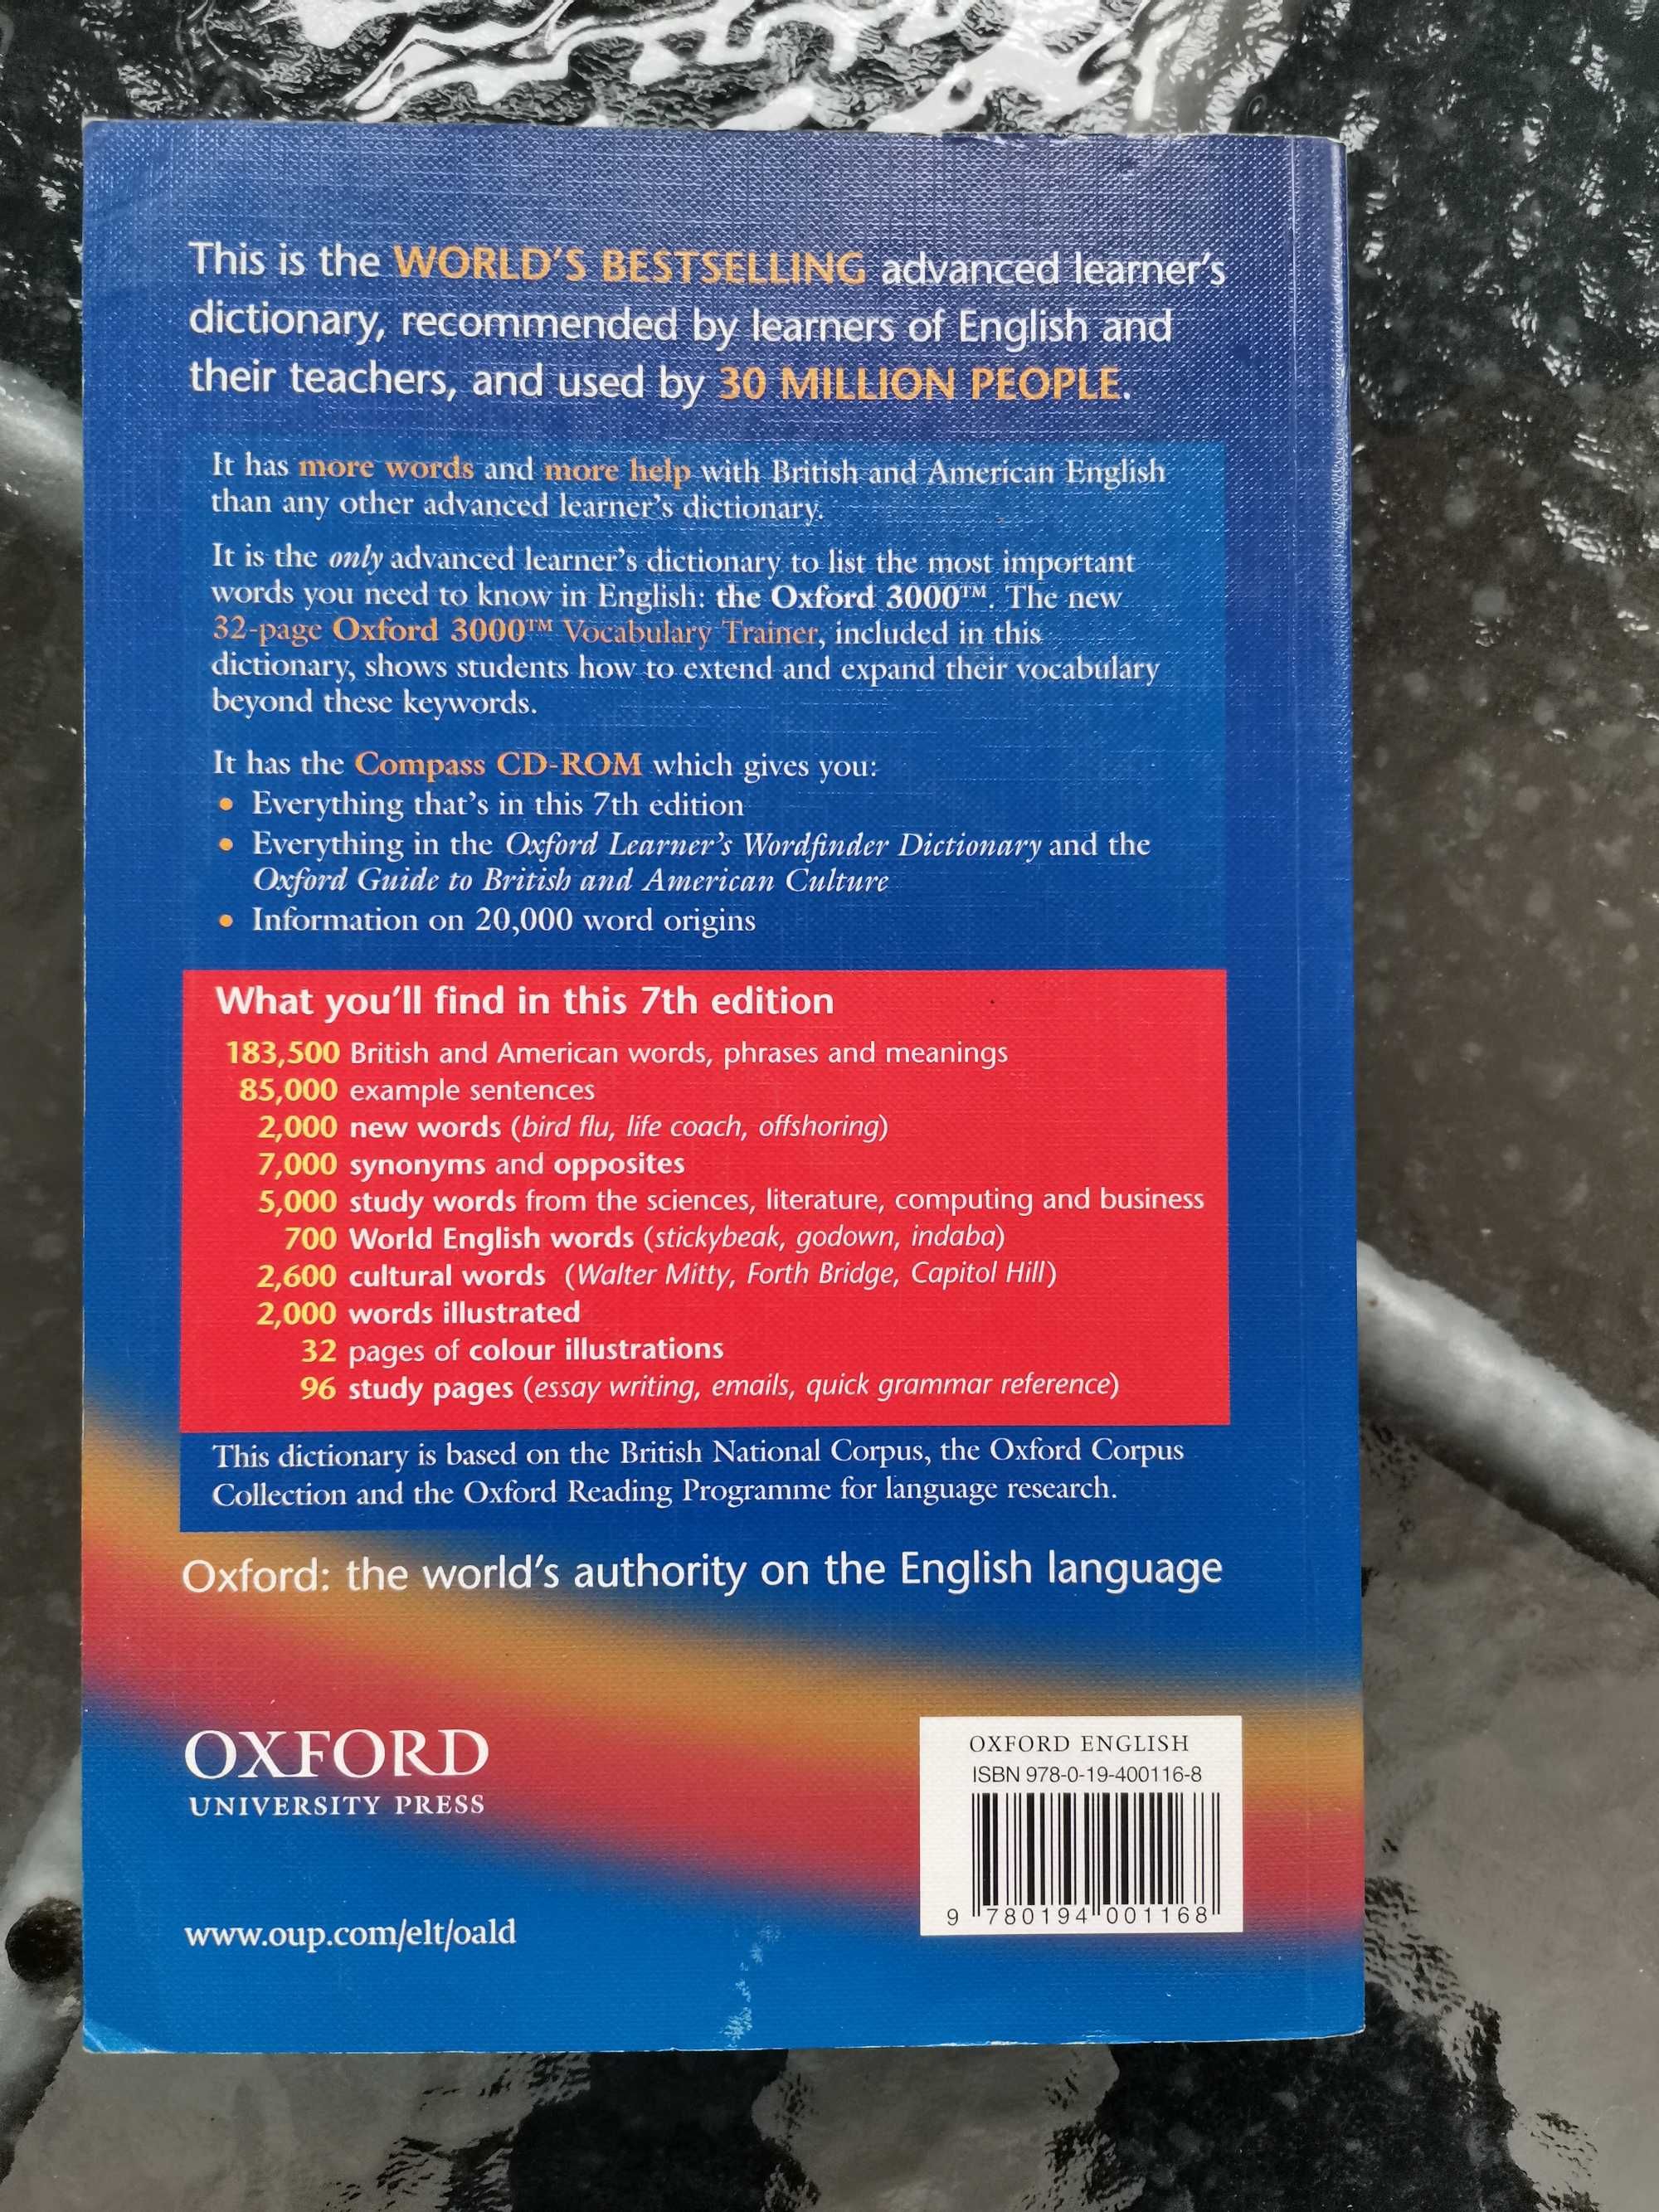 Oxford Advanced Learner's Dictionary (7th Edition) - słownik angielski